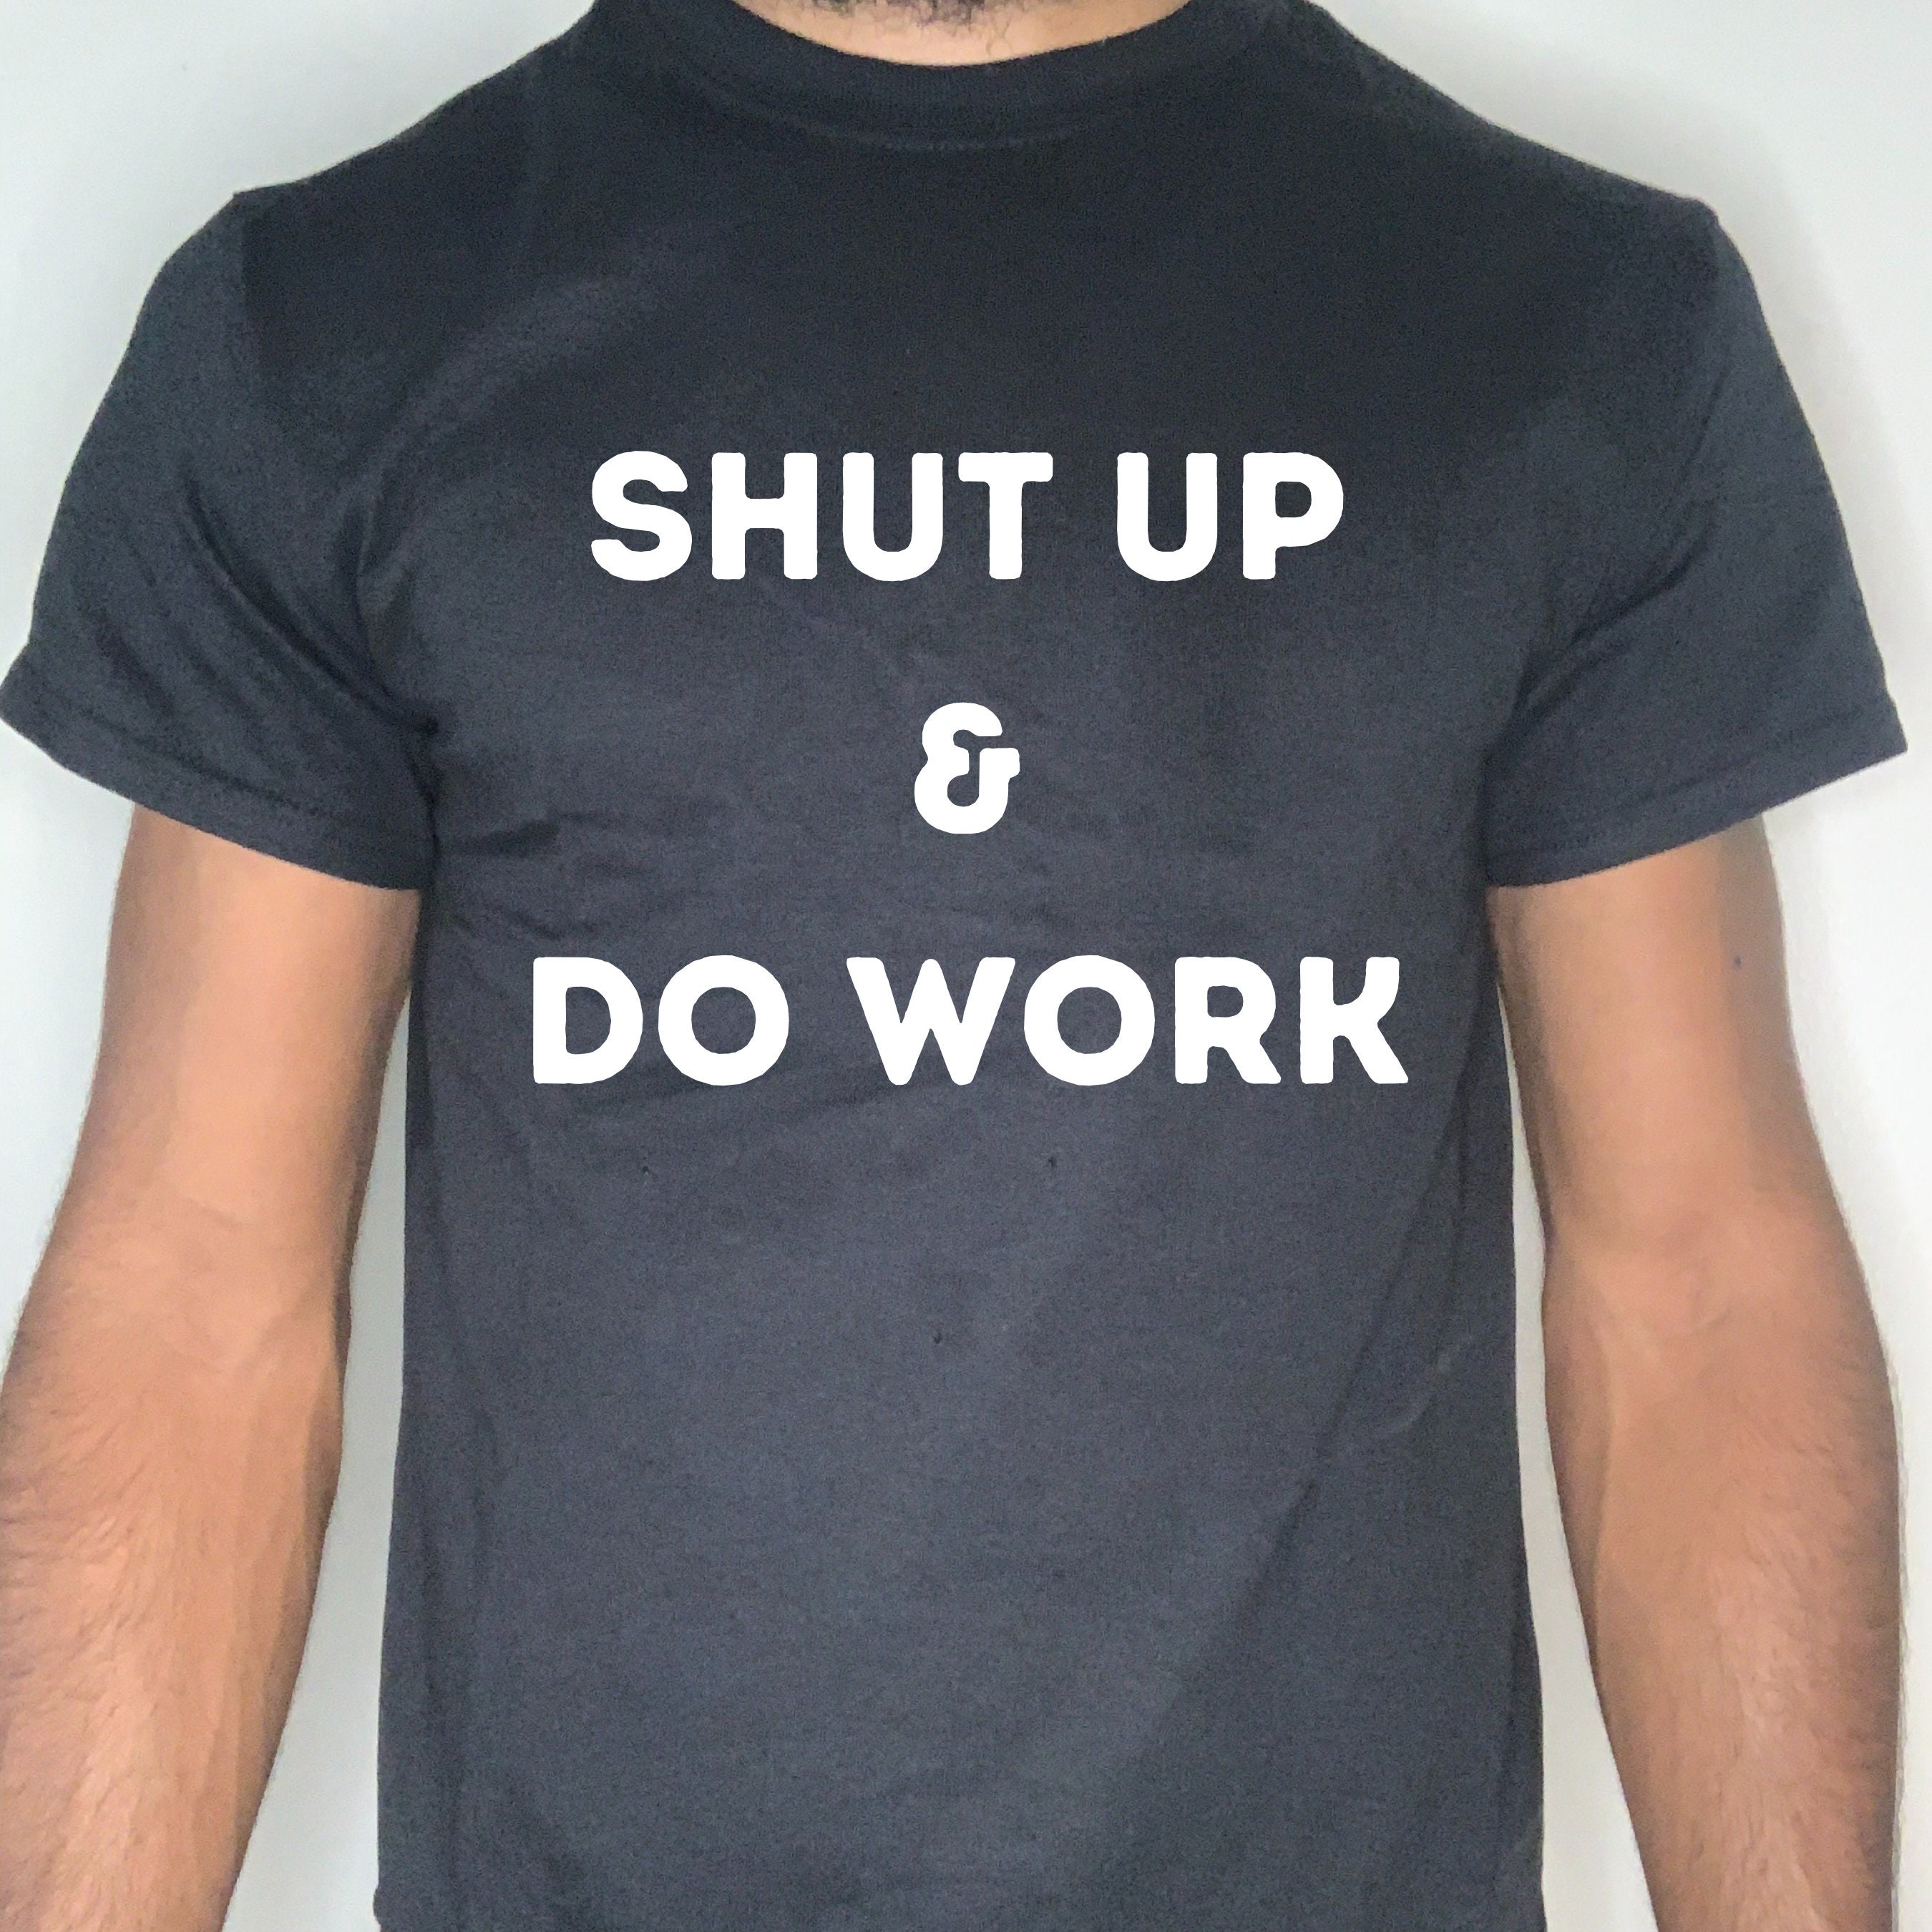 Shut up & do work motivational T-shirt | Etsy